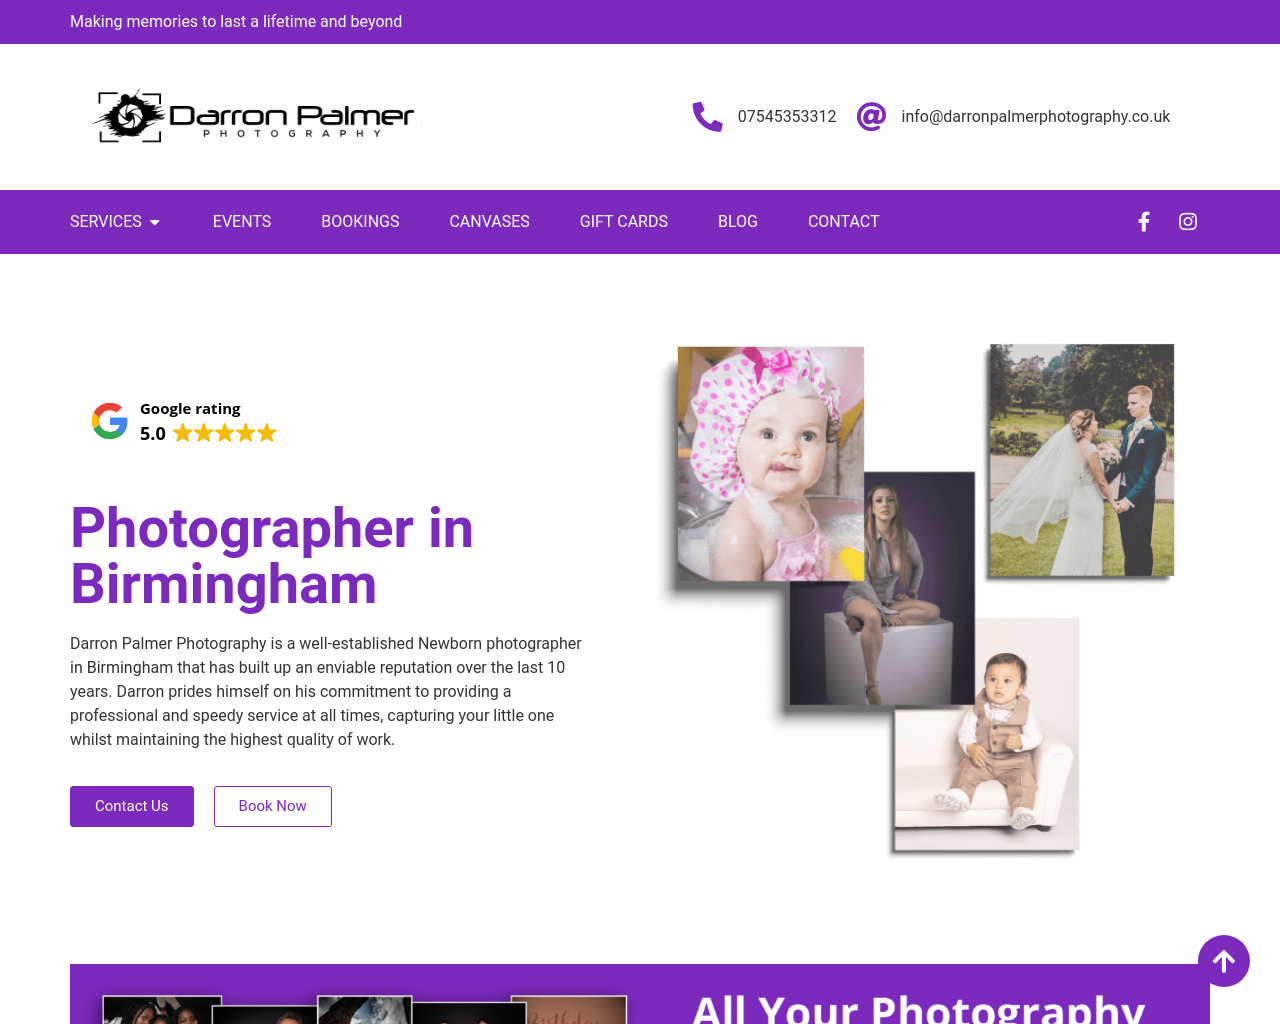 darronpalmerphotography.co.uk